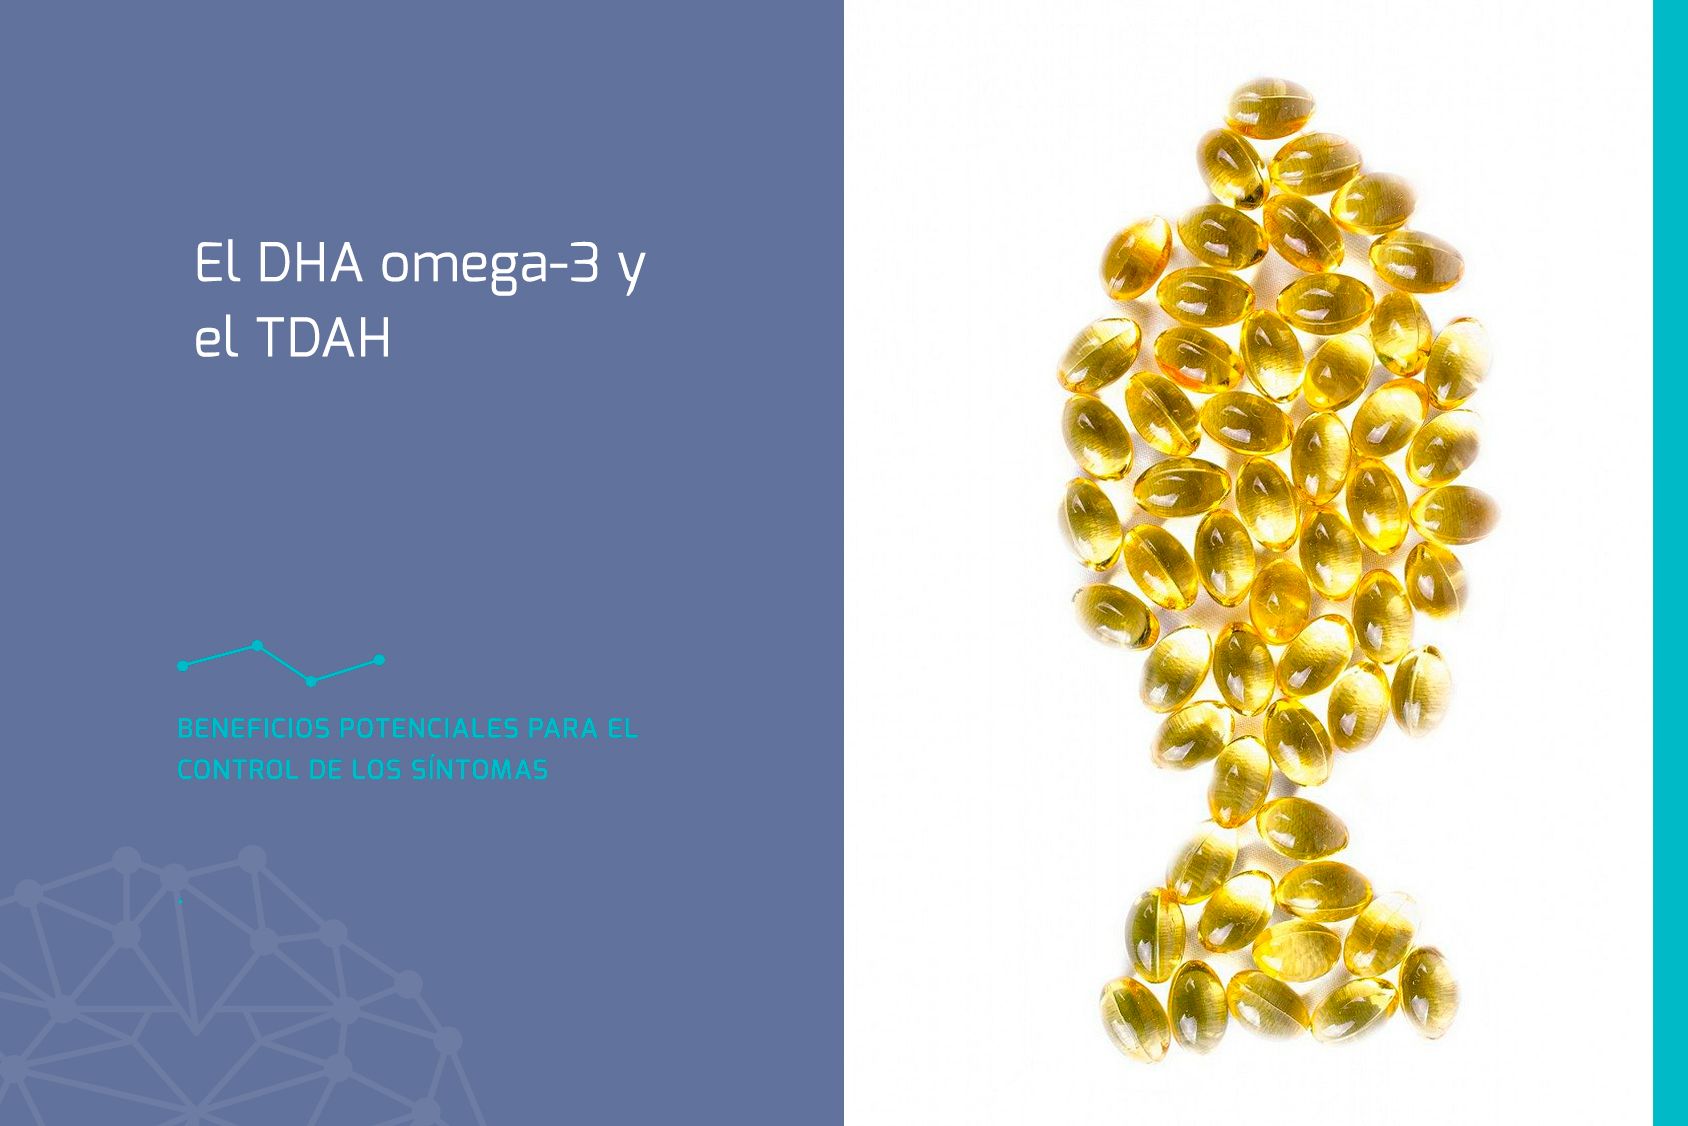 El DHA omega-3 y el TDAH